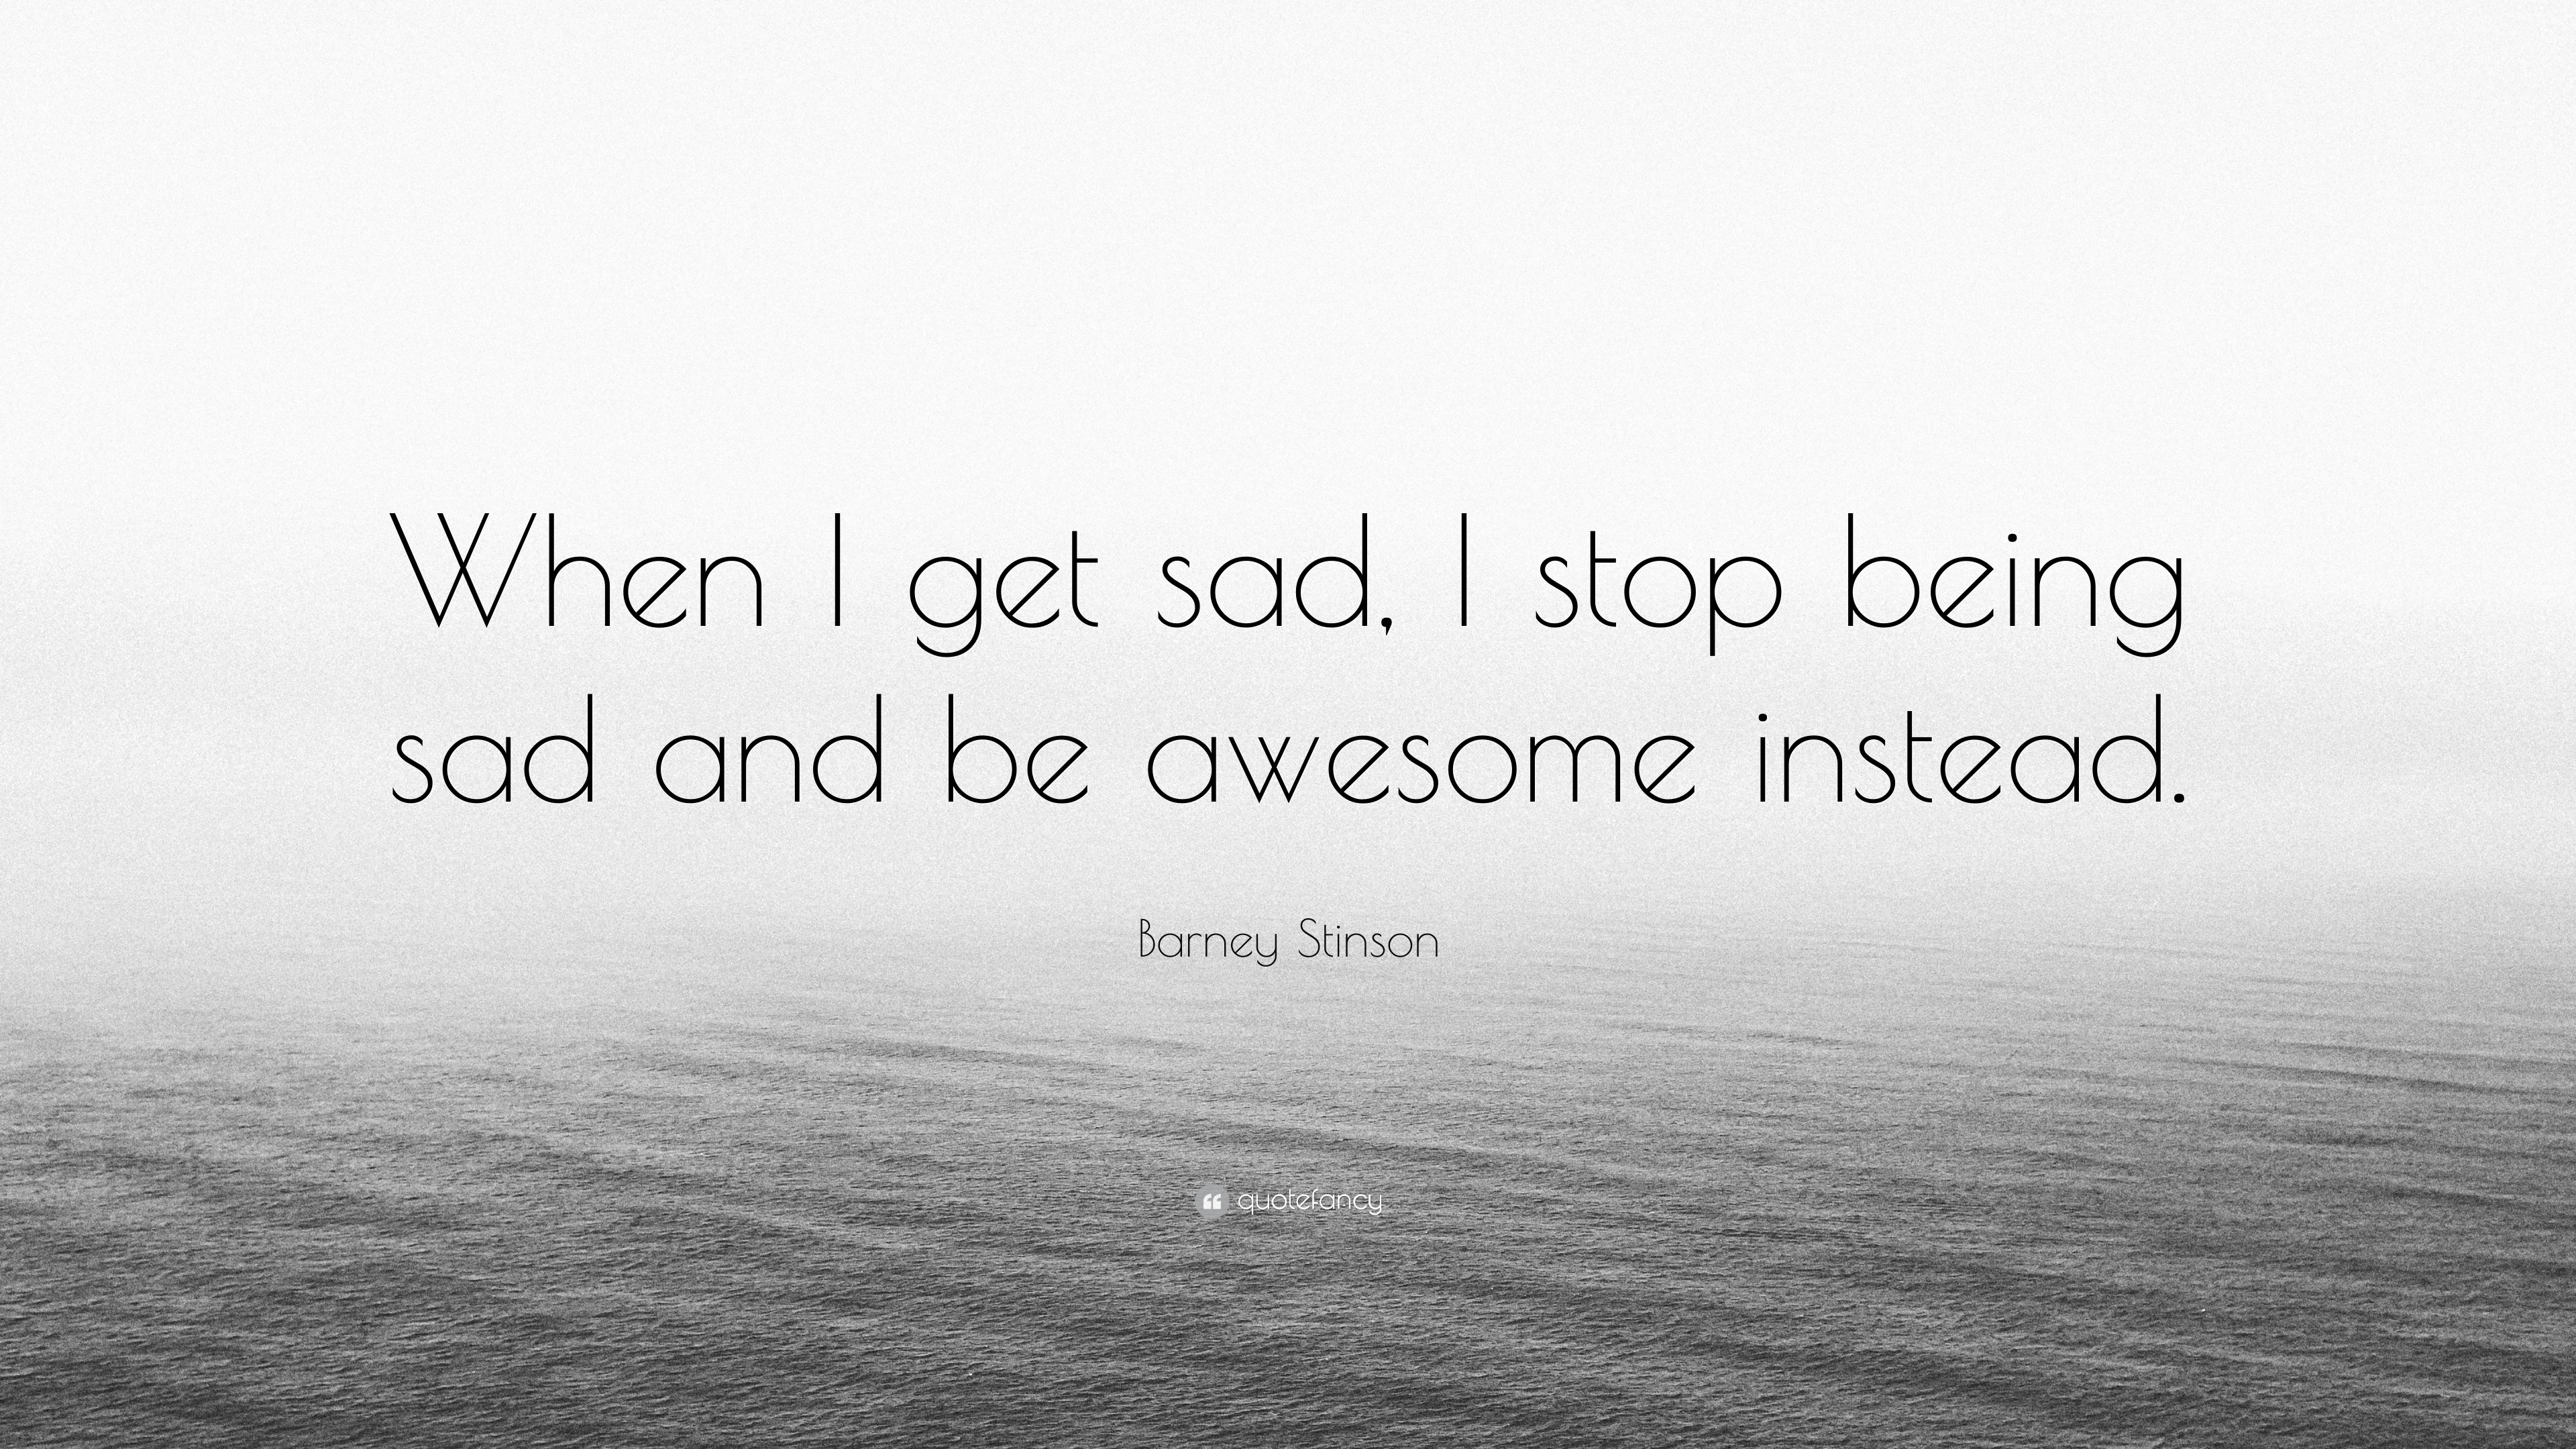 If sad, be awesome